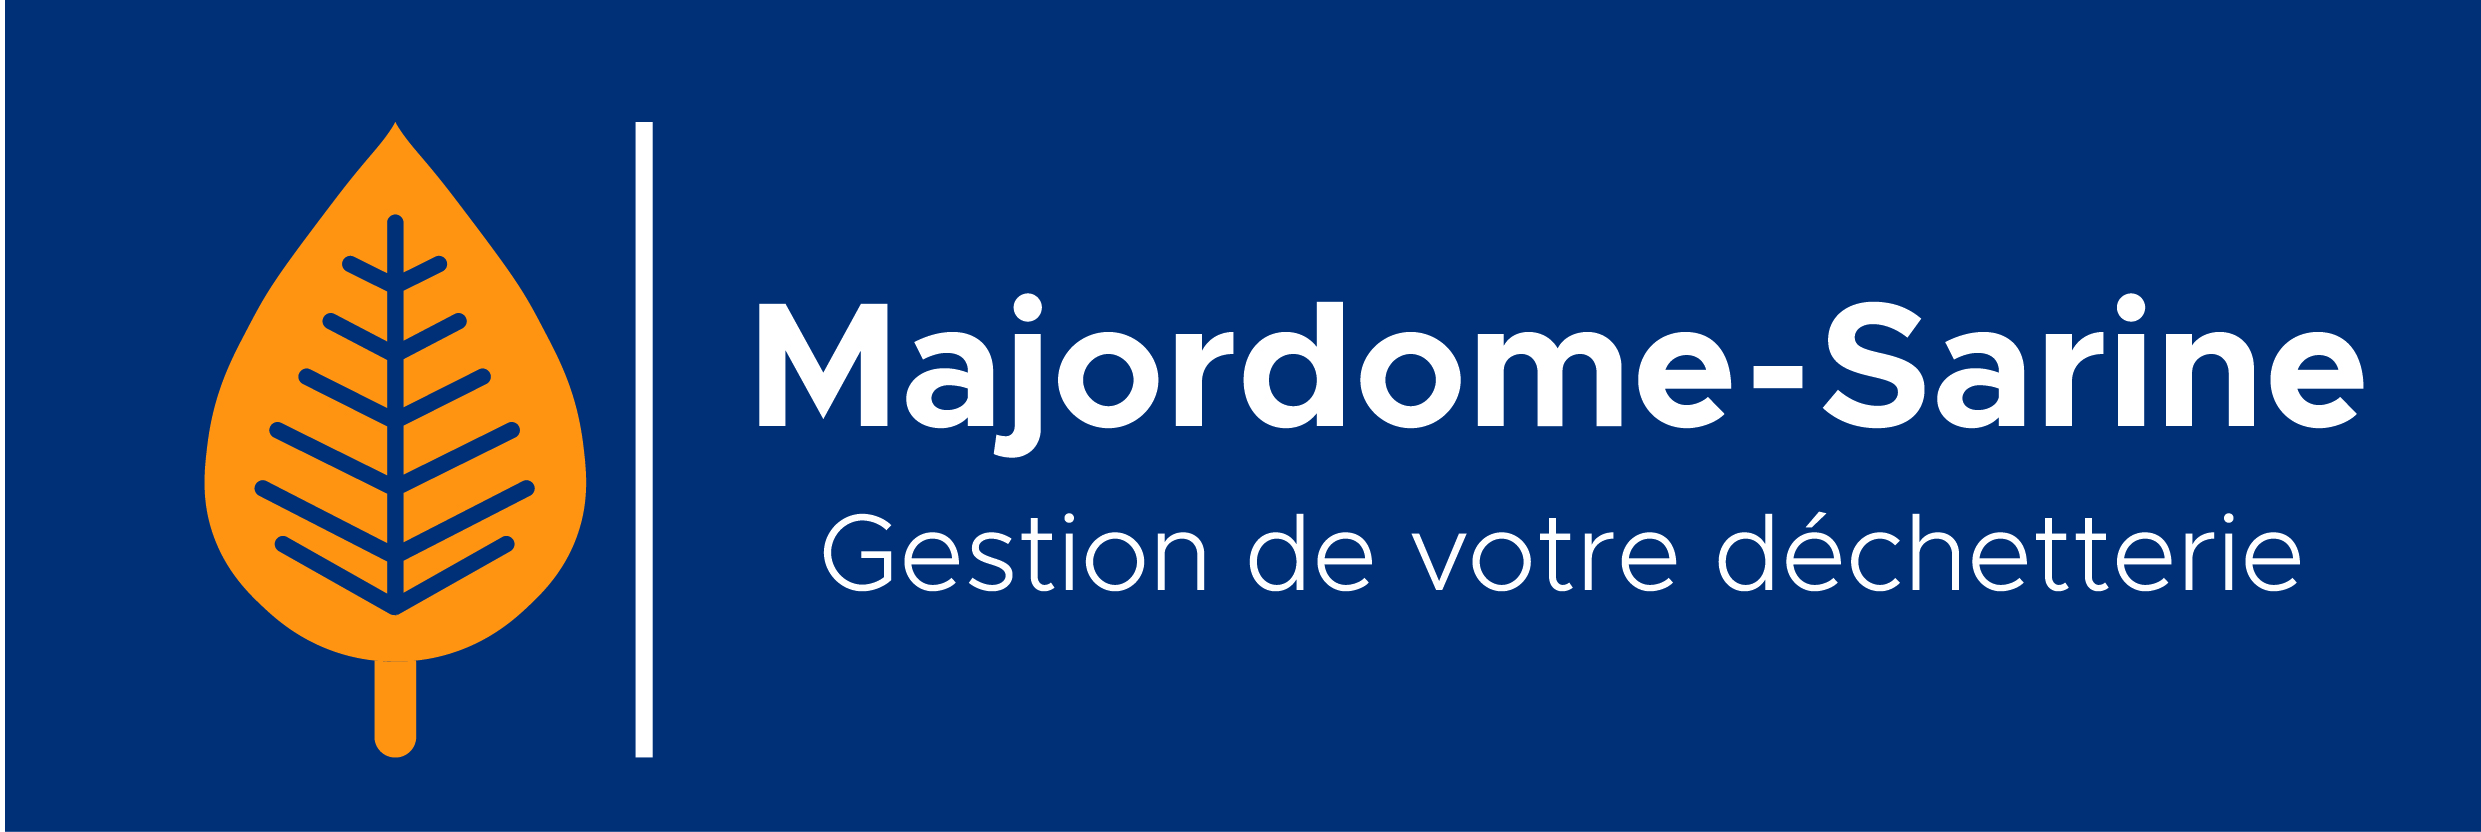 Majordome-Sarine